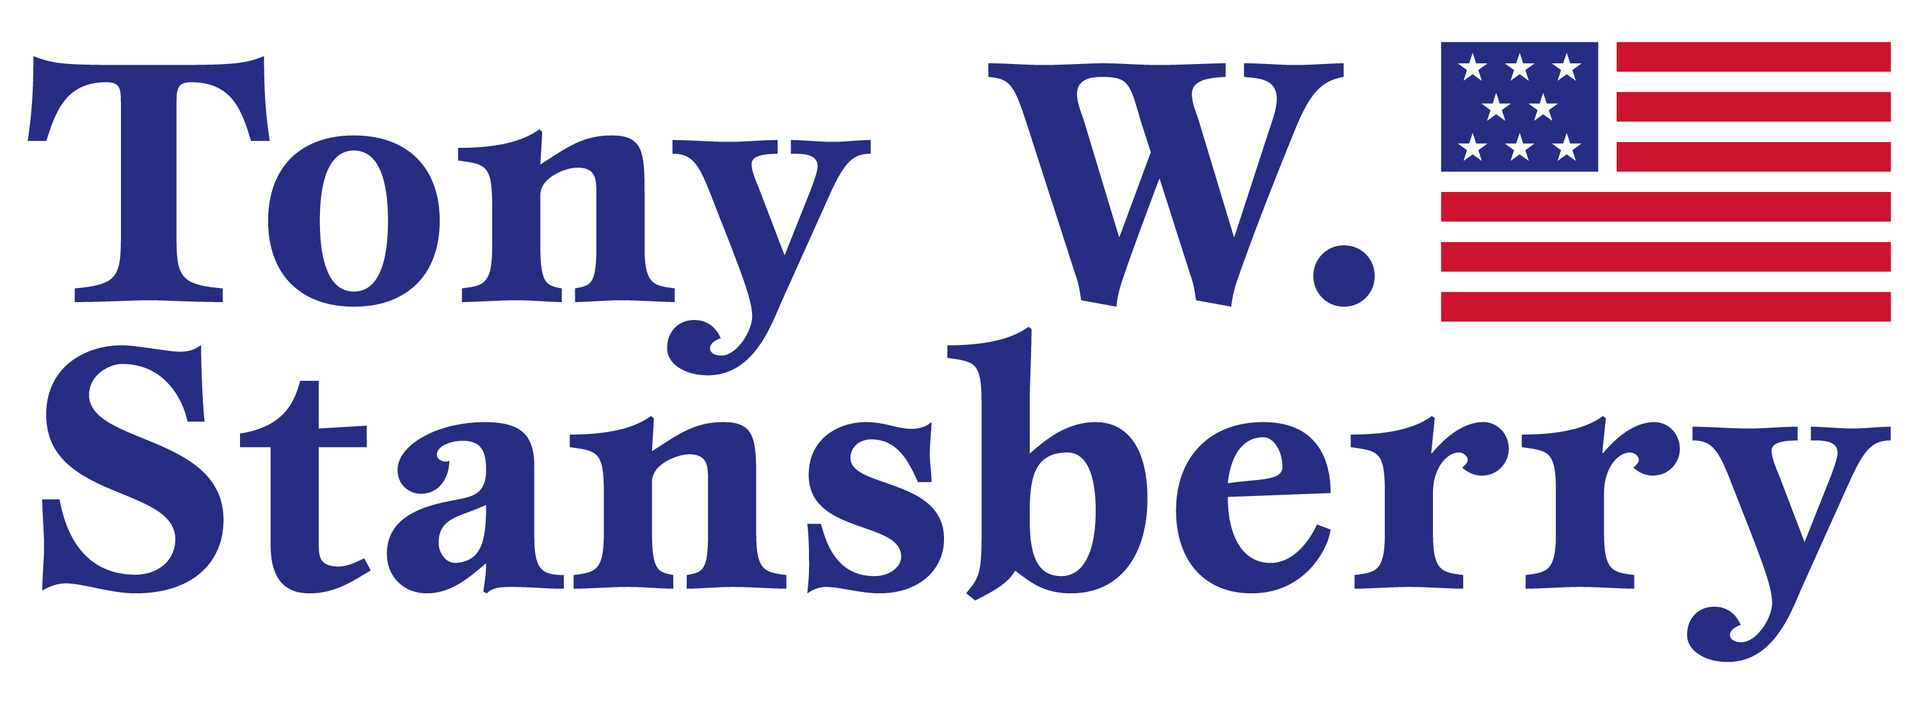 Stansberry logo final